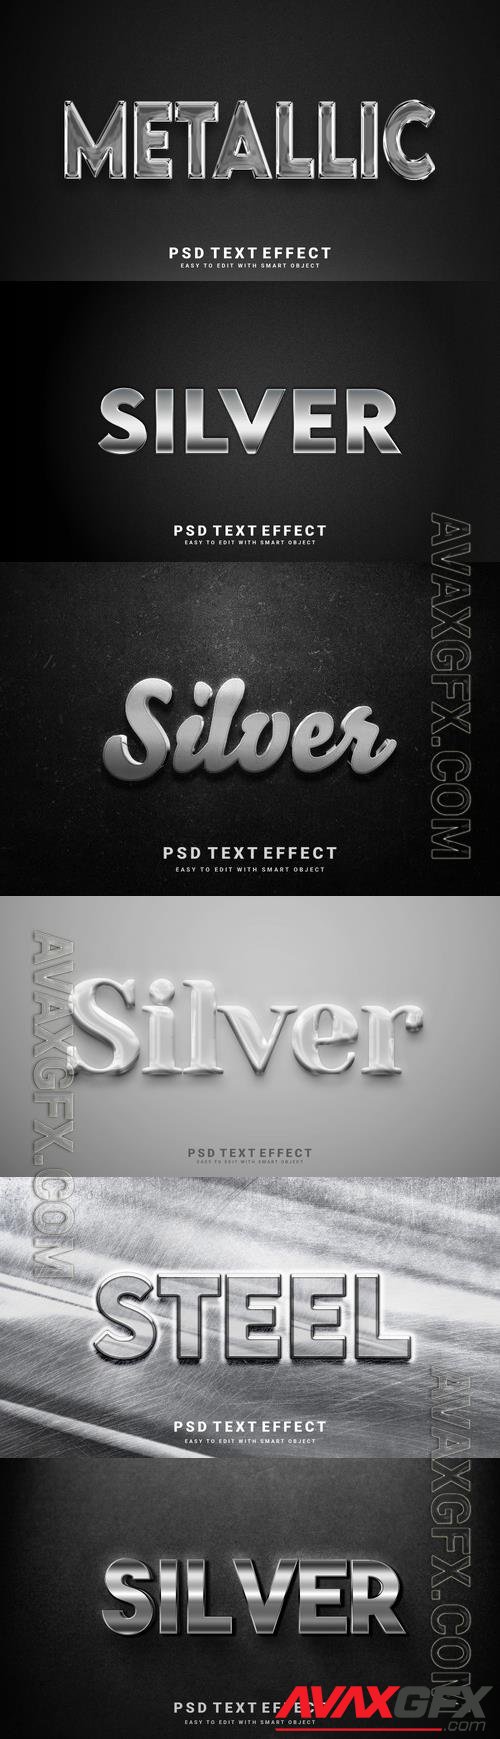 PSD silver, metallic, steel creative editable text effect design